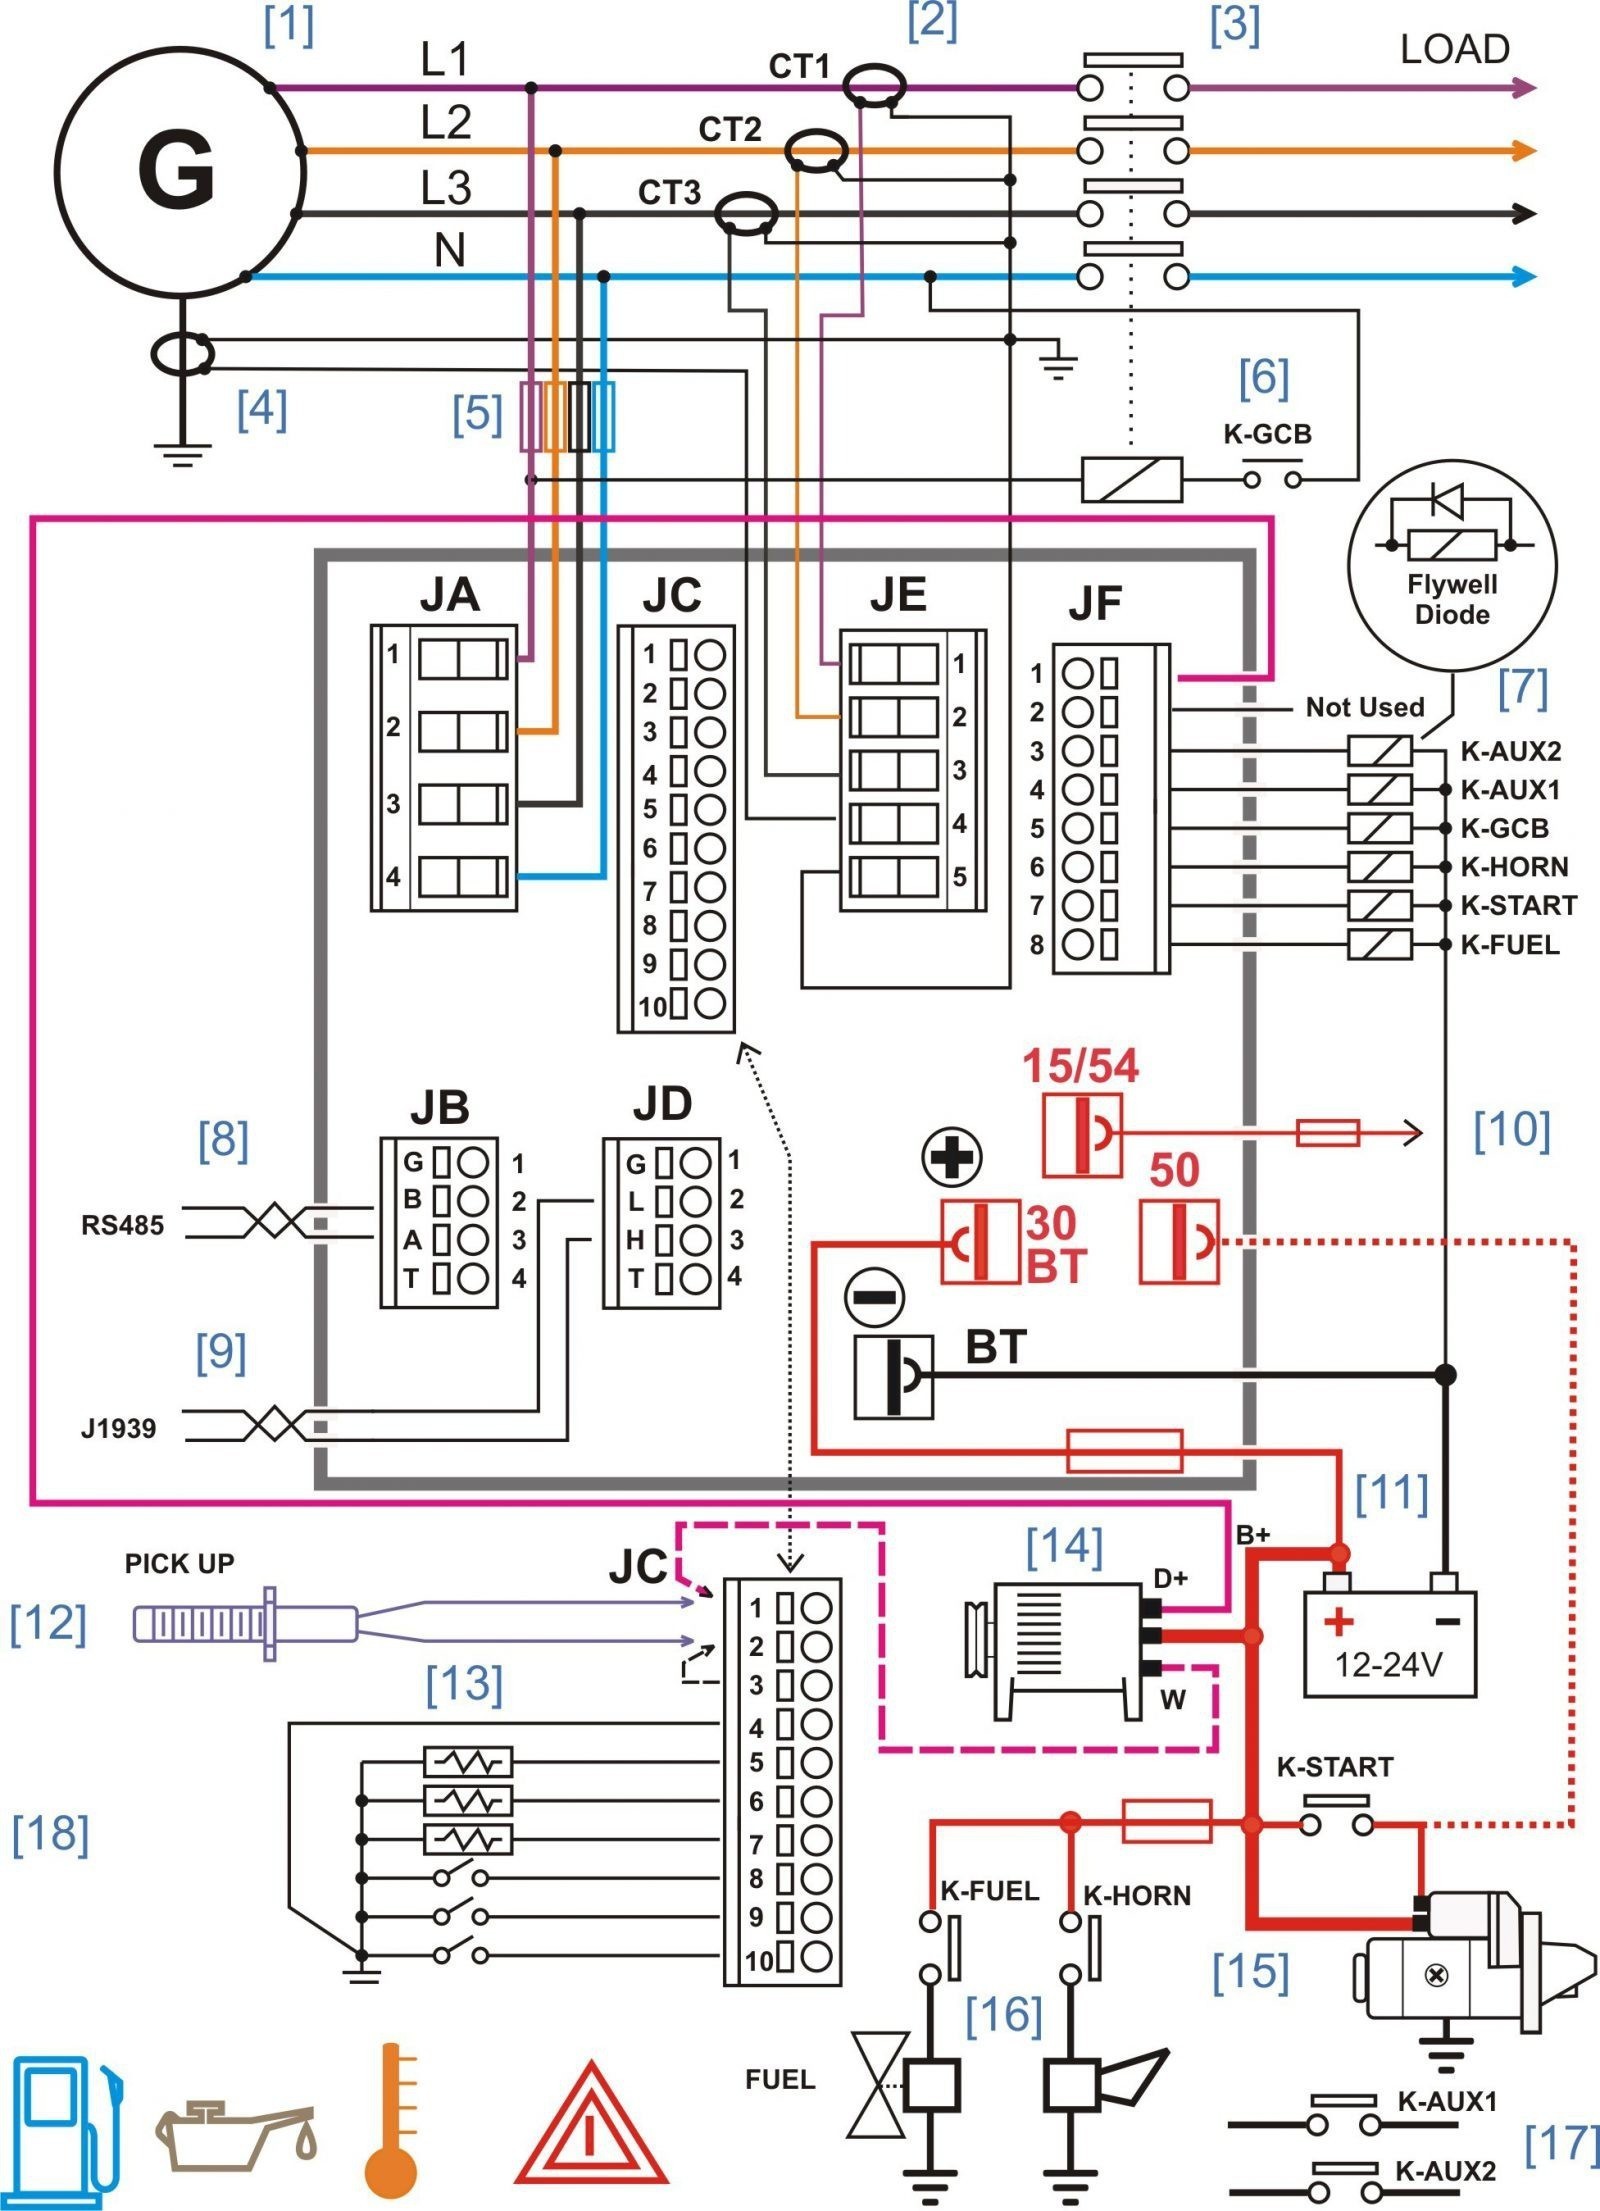 Car Deck Wiring Diagram Fresh Car Stereo Wiring Diagram Awesome 3 Speed O D Help – Diagram